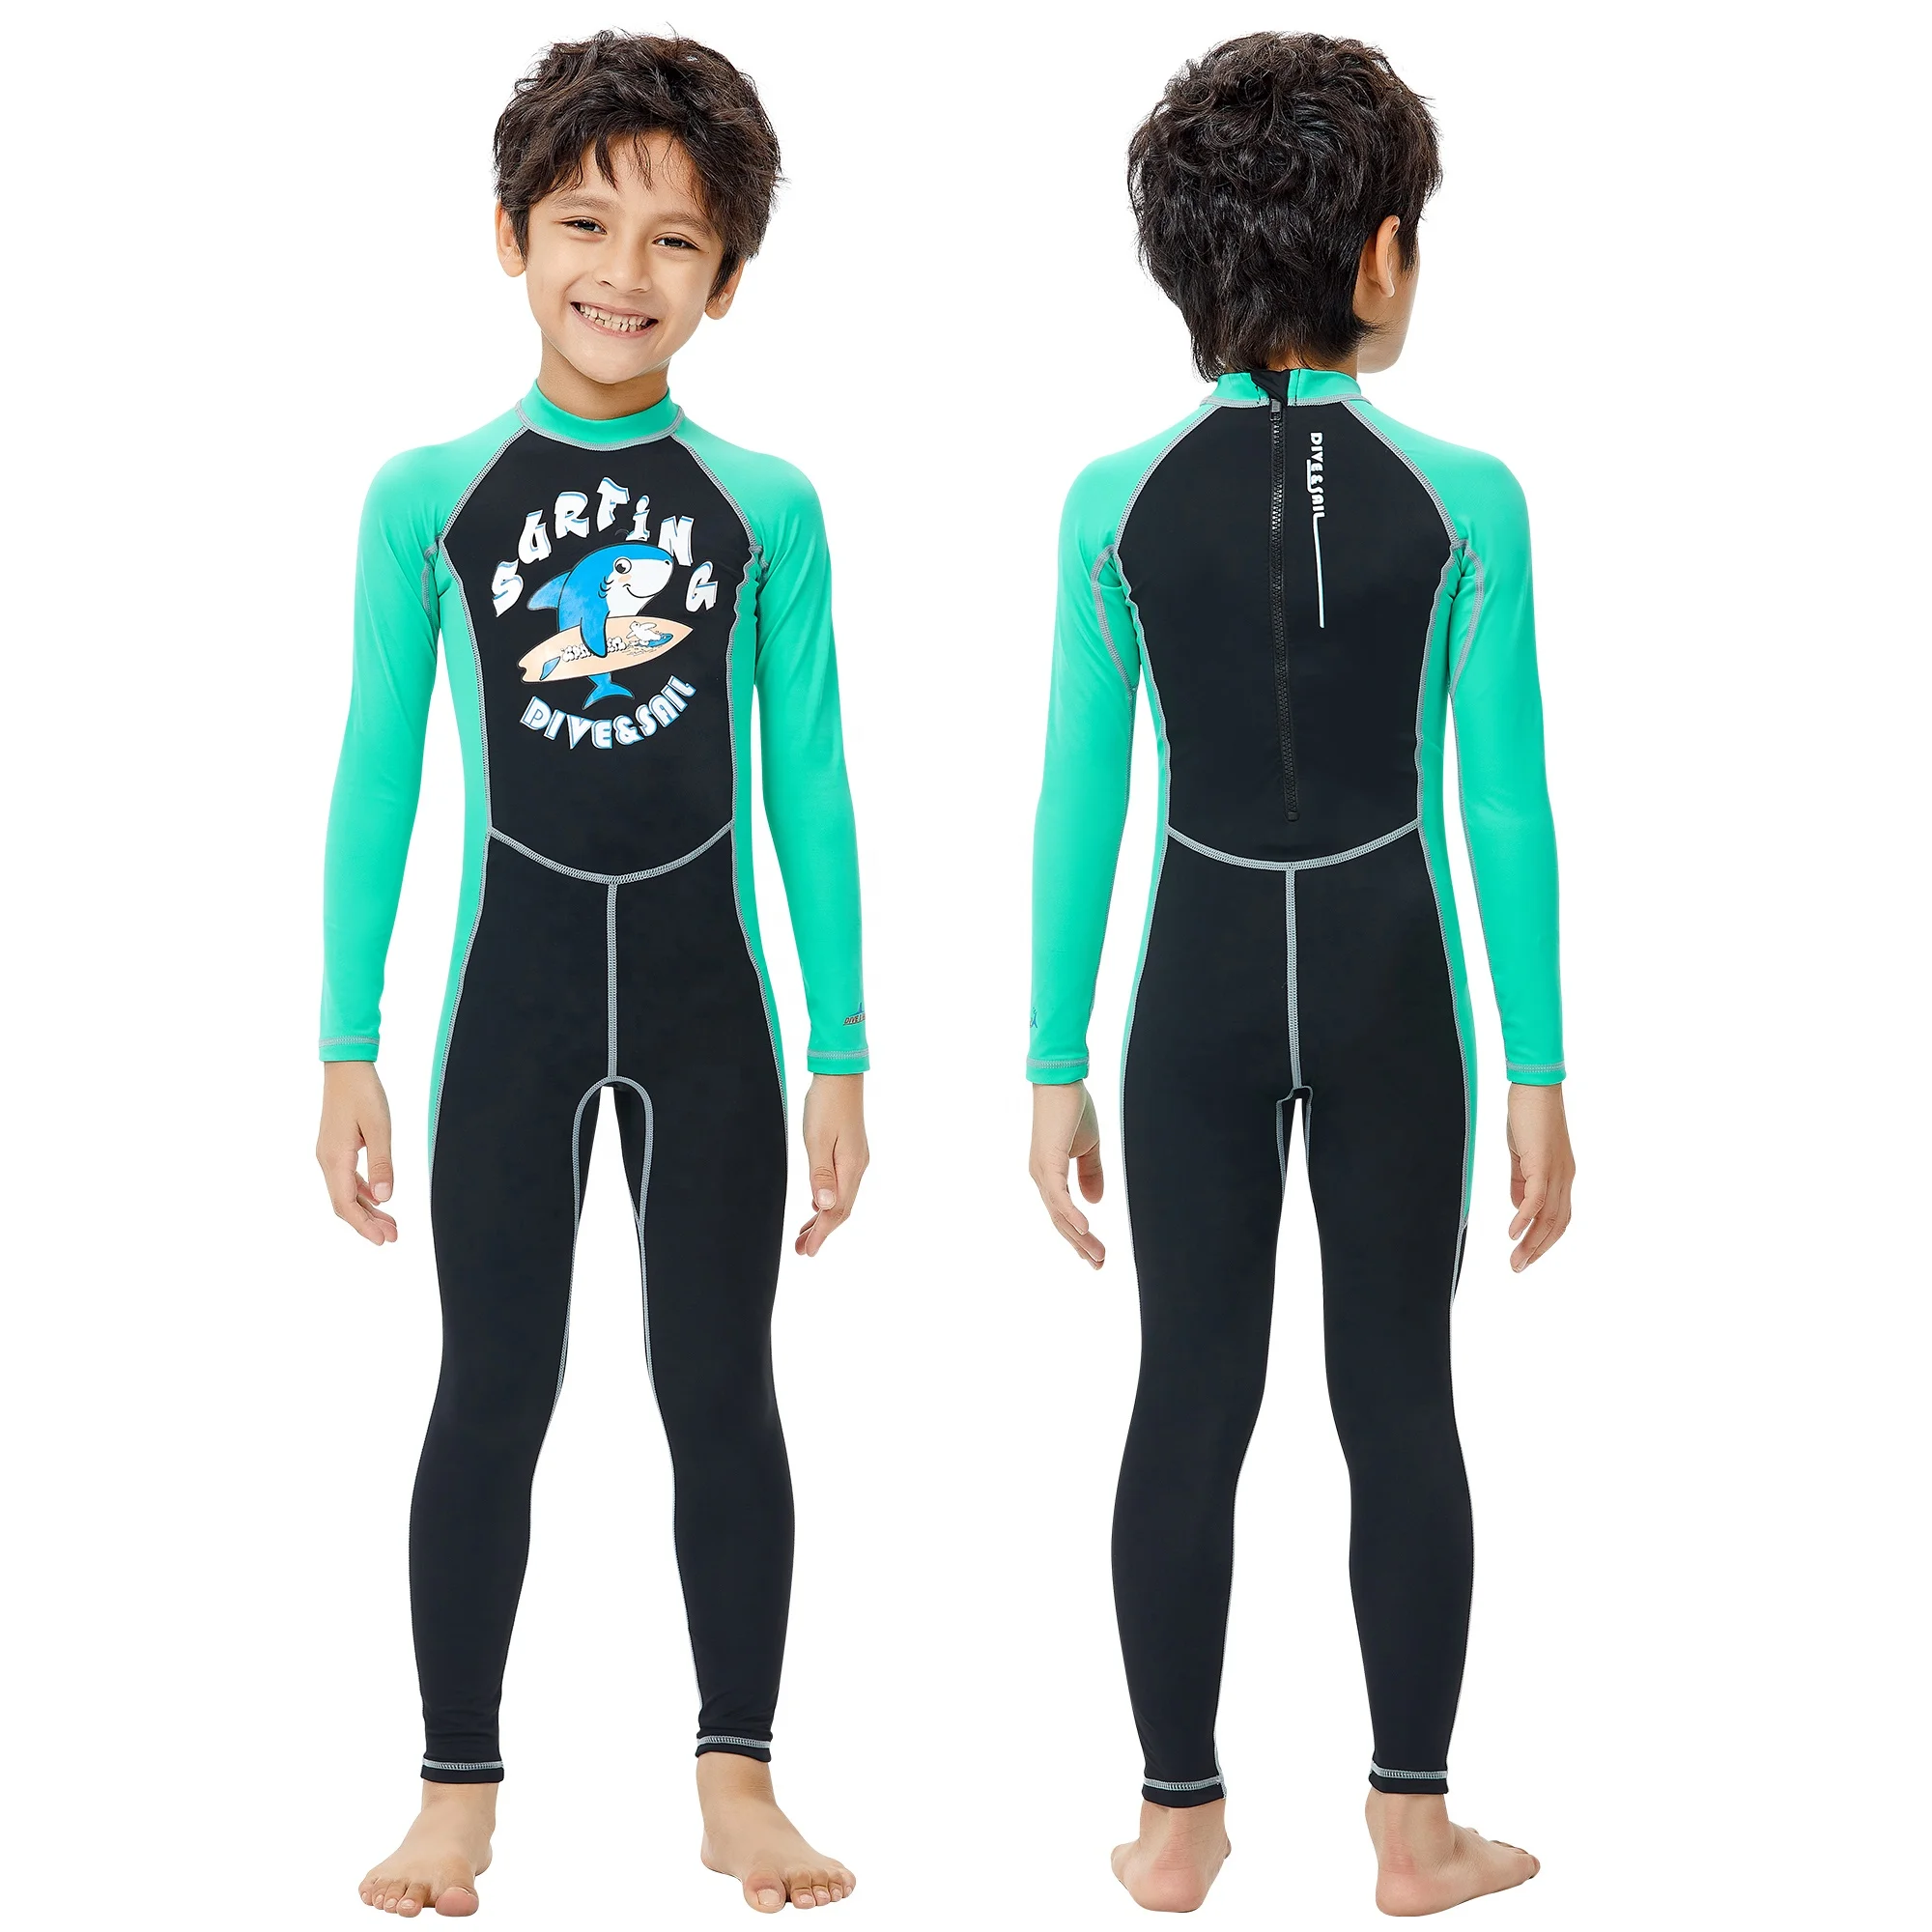 

Kids Wetsuit For Boys Girls Diving Suits Back Zipper Swimsuits Keep Warm Diving Surfing Suit, Pics show/accept customize color